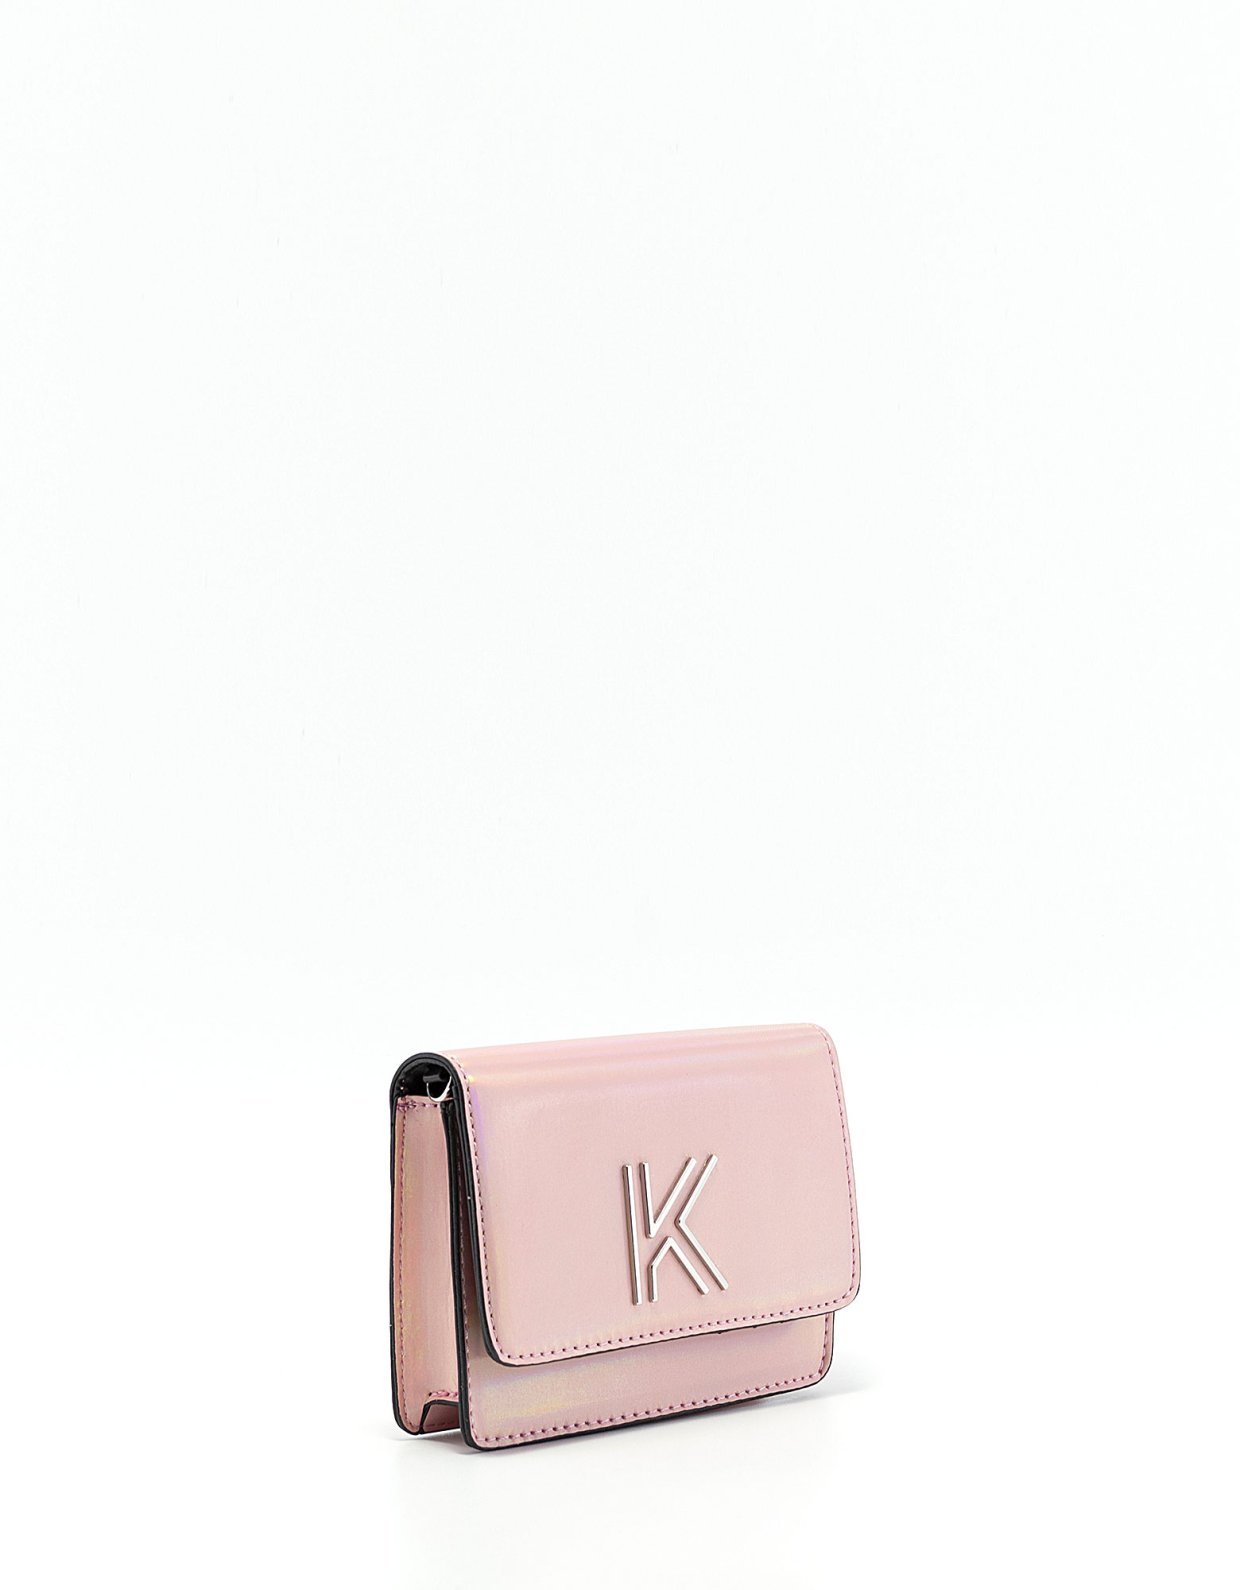 Kendall + Kylie Arya crossbody pink iridescent